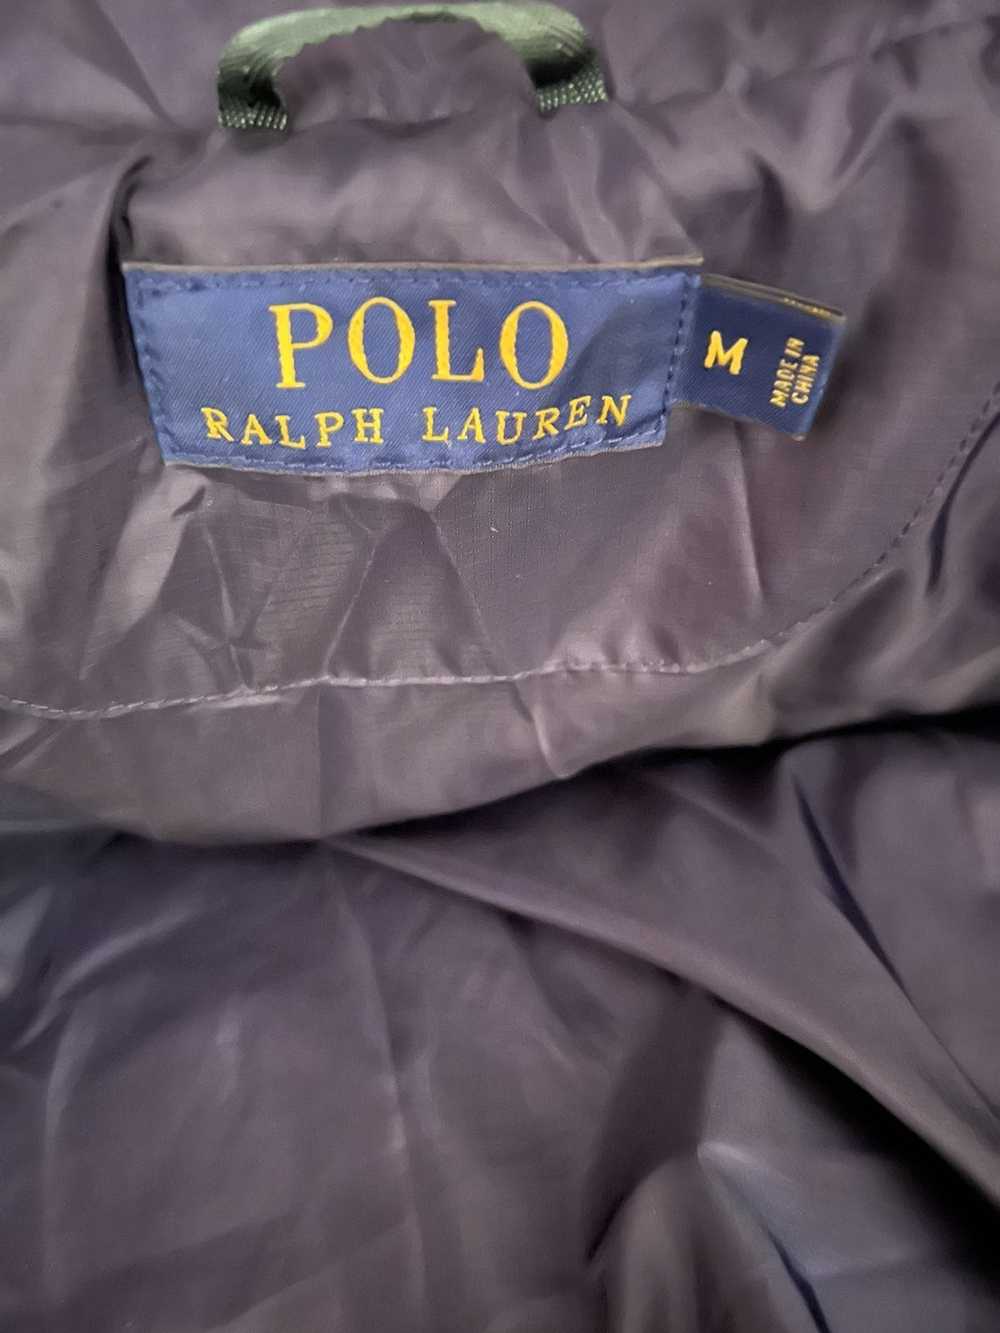 Polo Ralph Lauren Polo Down Jacket - image 2